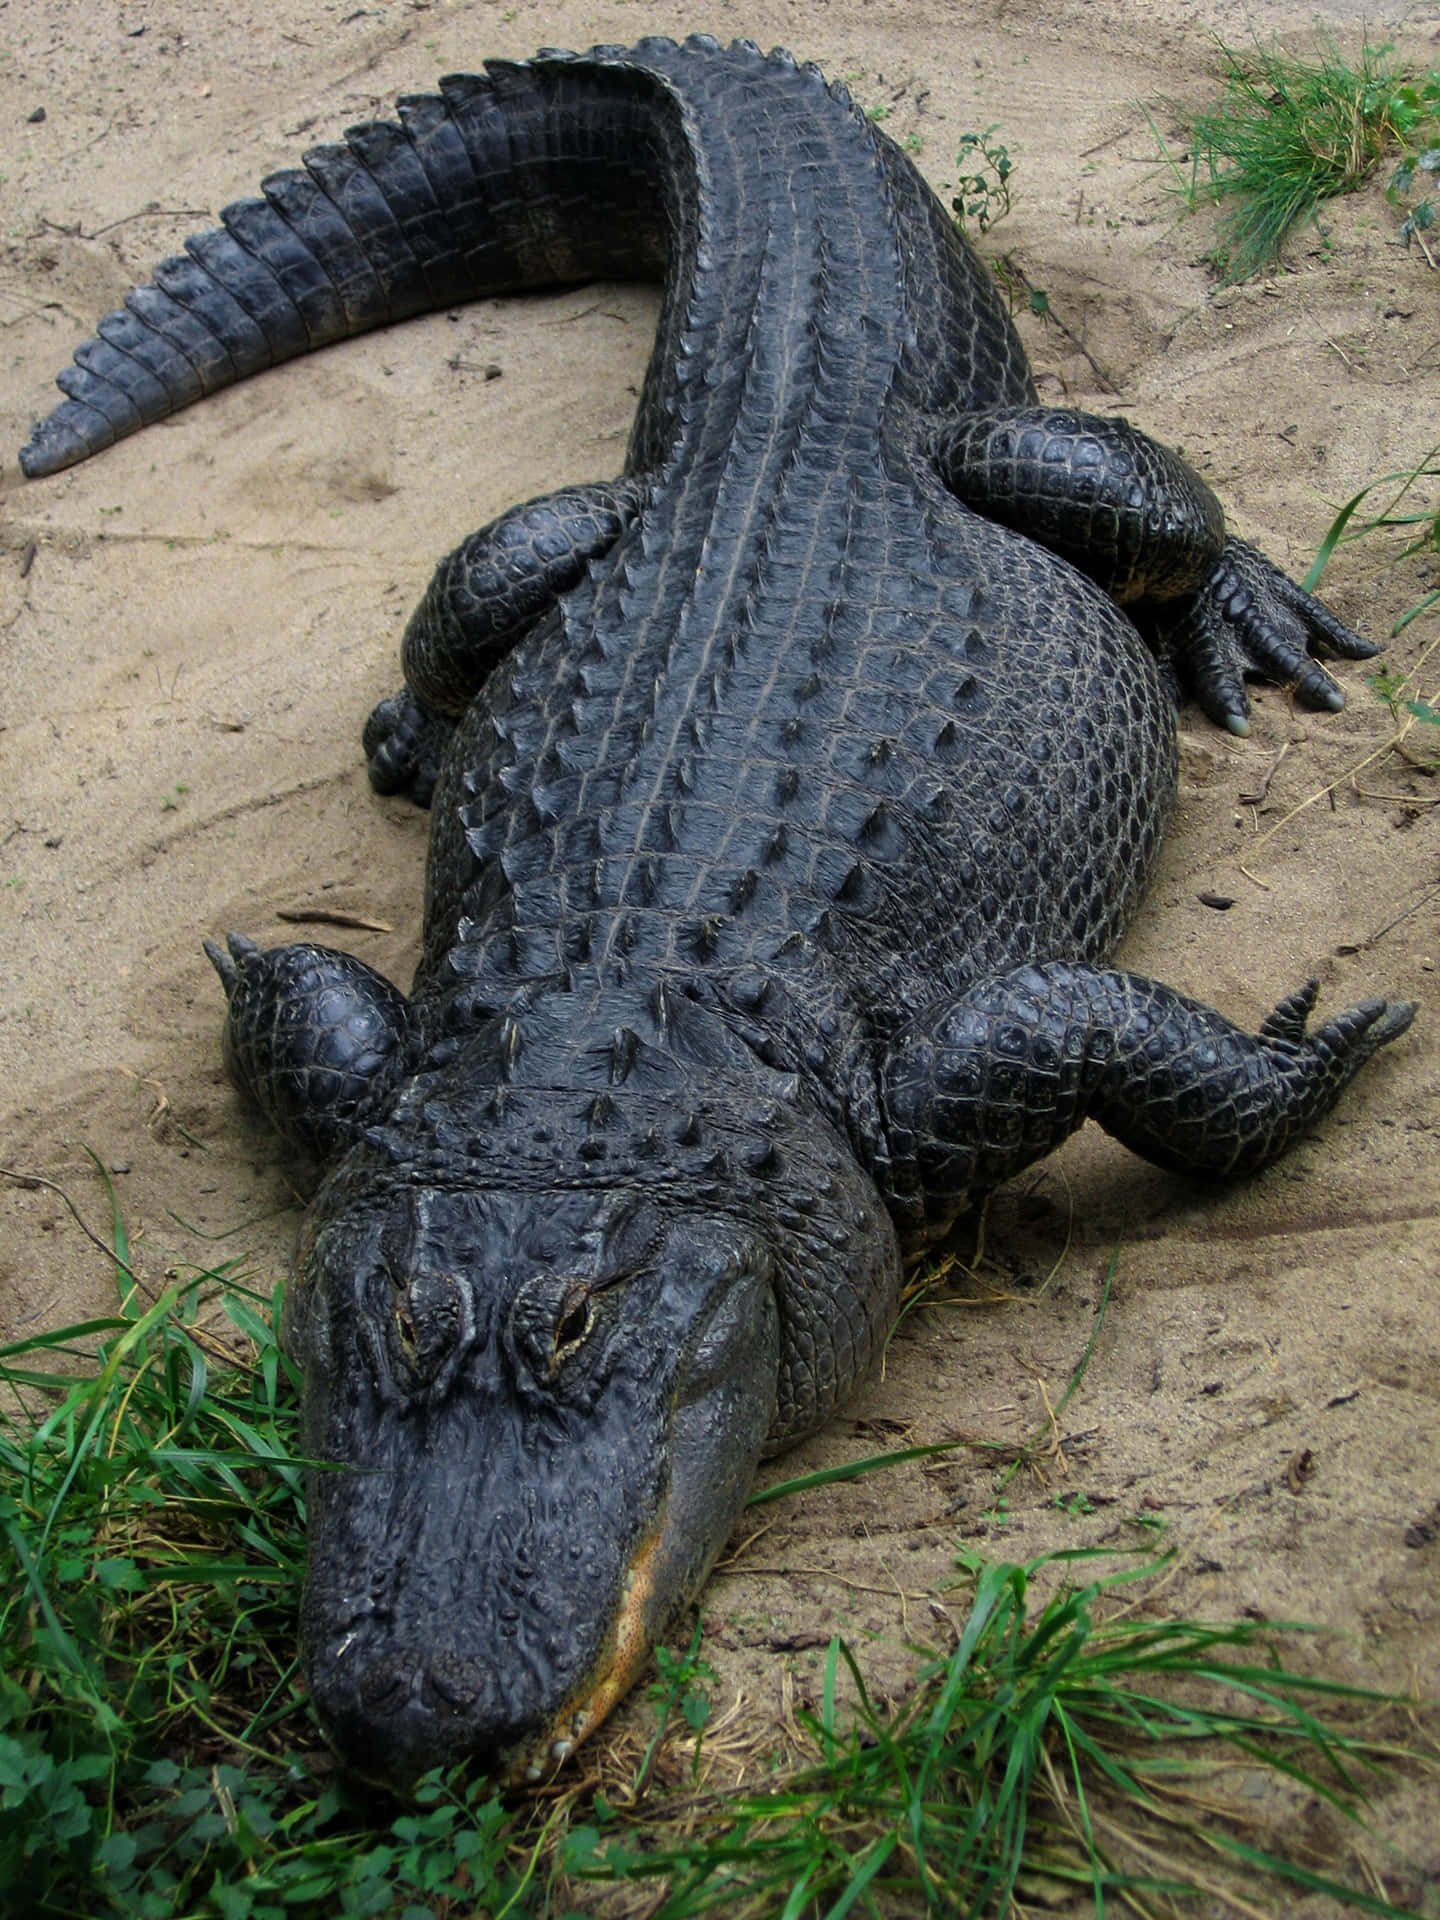 An Alligator Swimming Through Marshy Waters